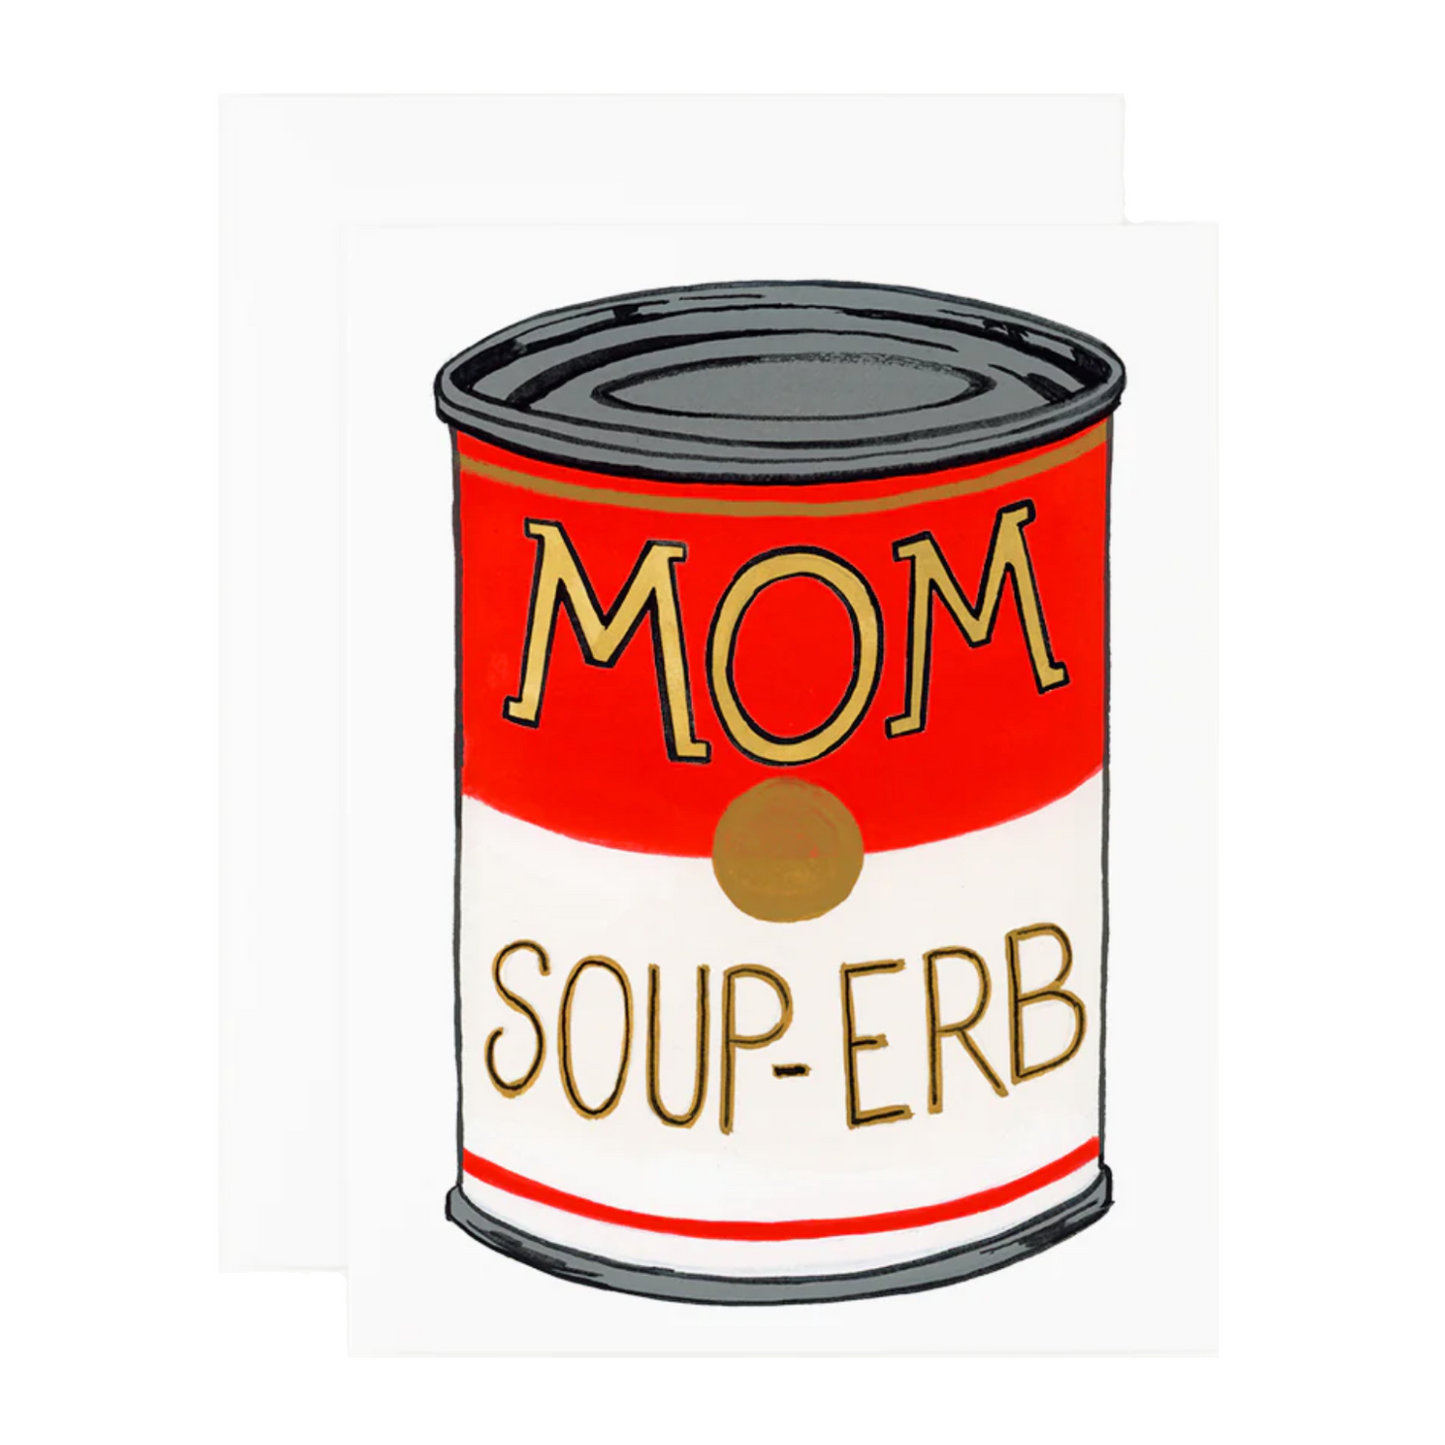 Mom Soup-erb Card by Dear Hancock